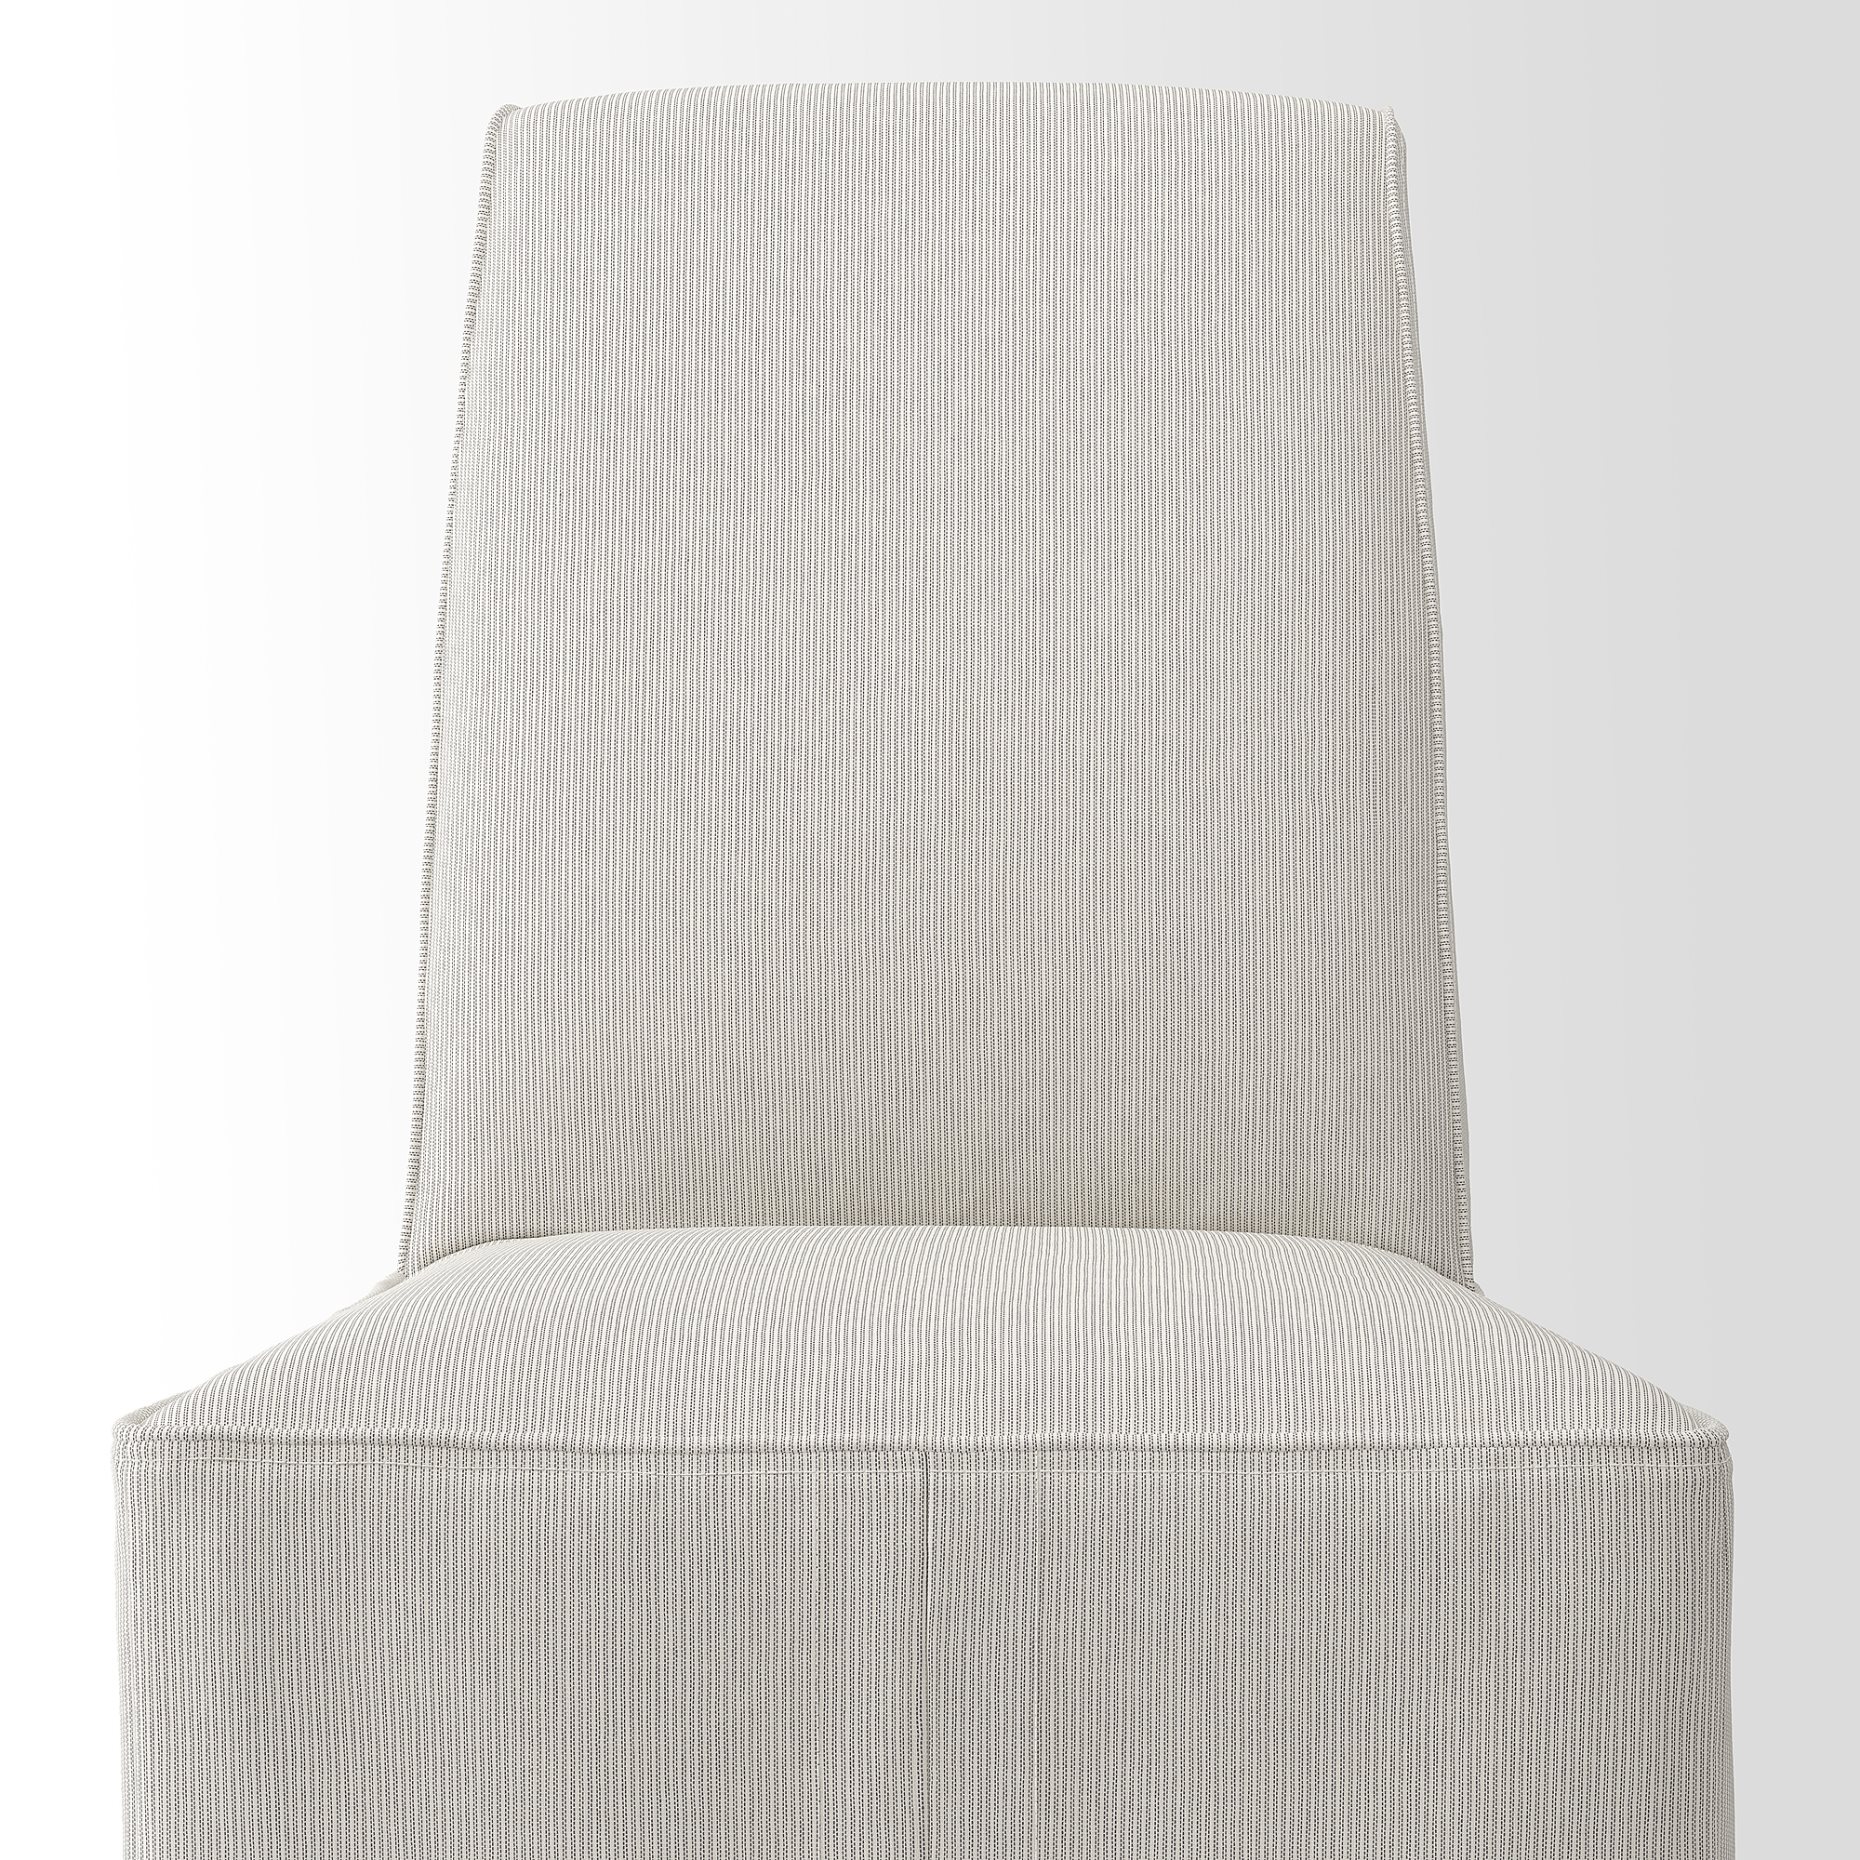 BERGMUND, καρέκλα με μακρύ κάλυμμα, 093.846.02